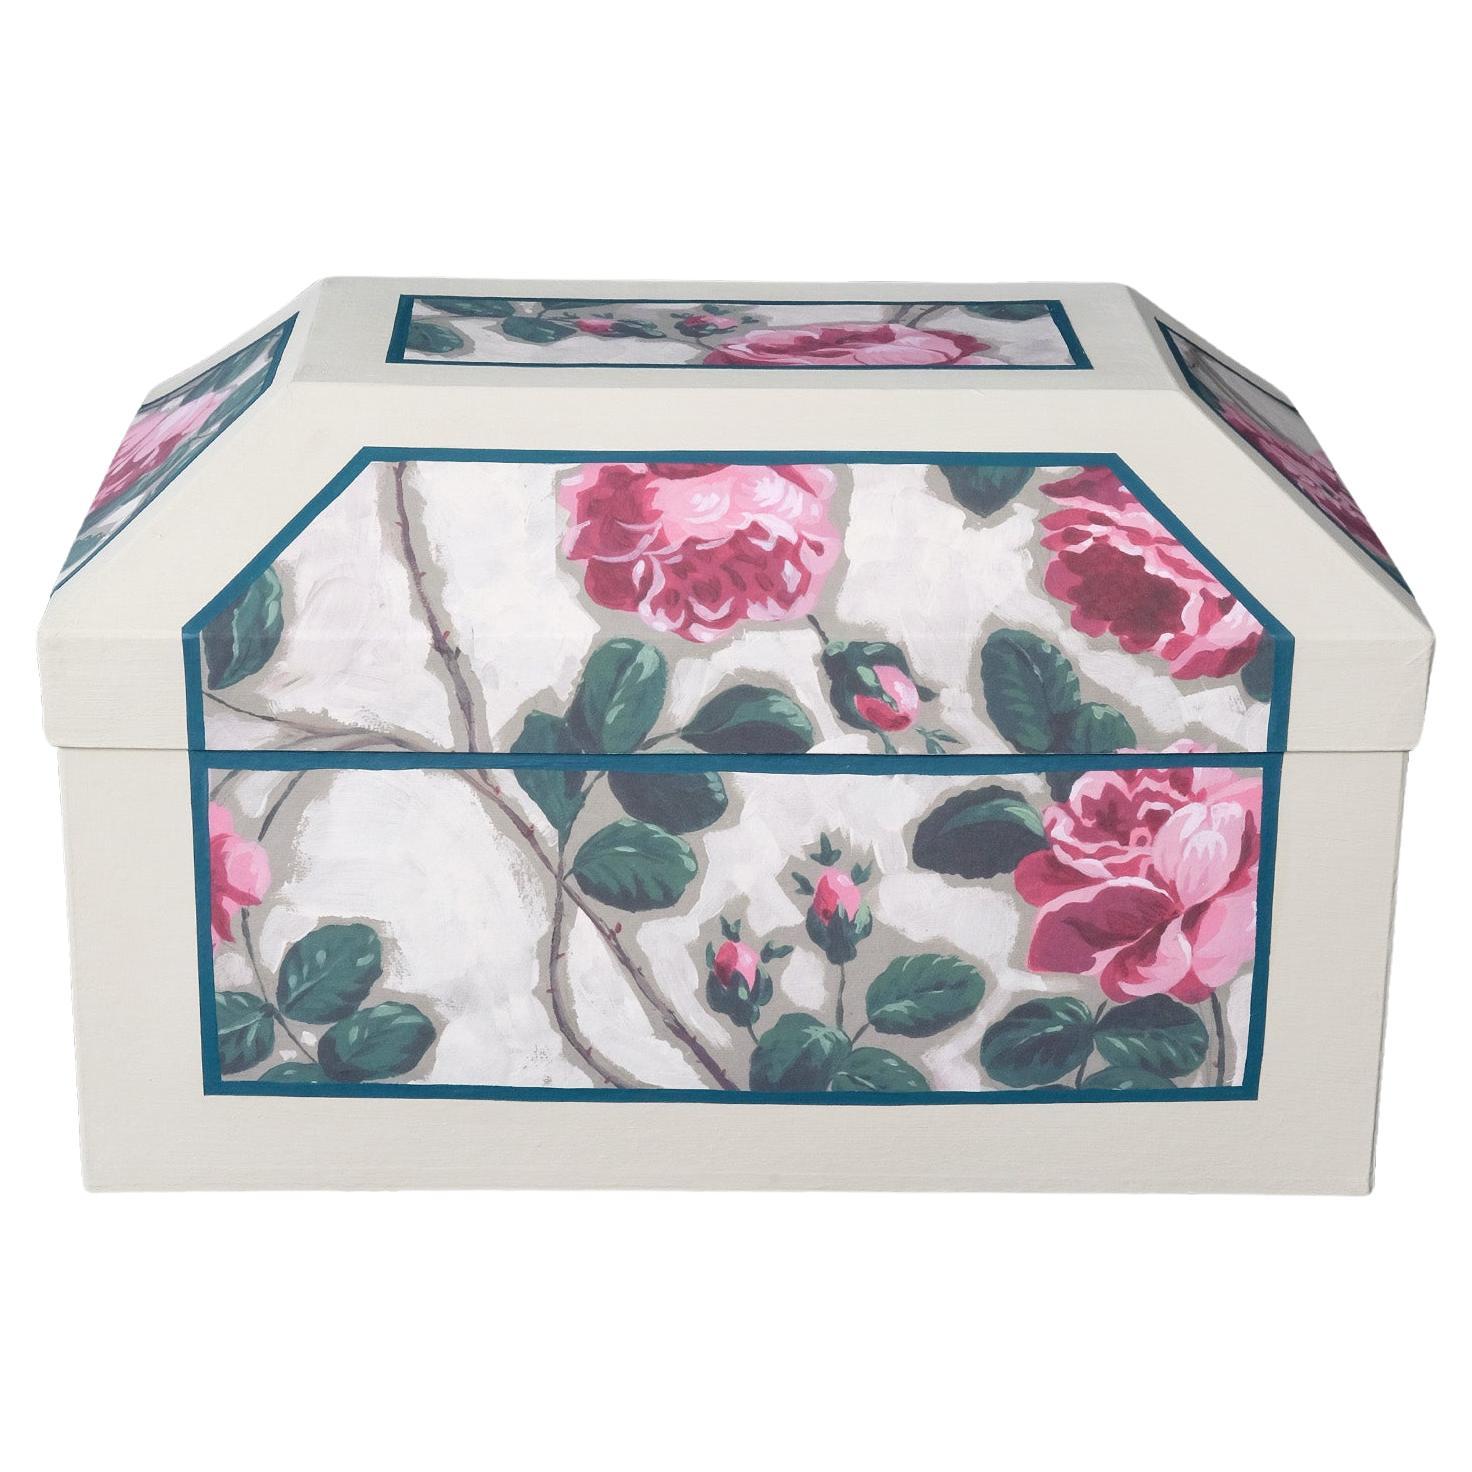 Handmade Papier-mâché Wedding Box - Made in France For Sale